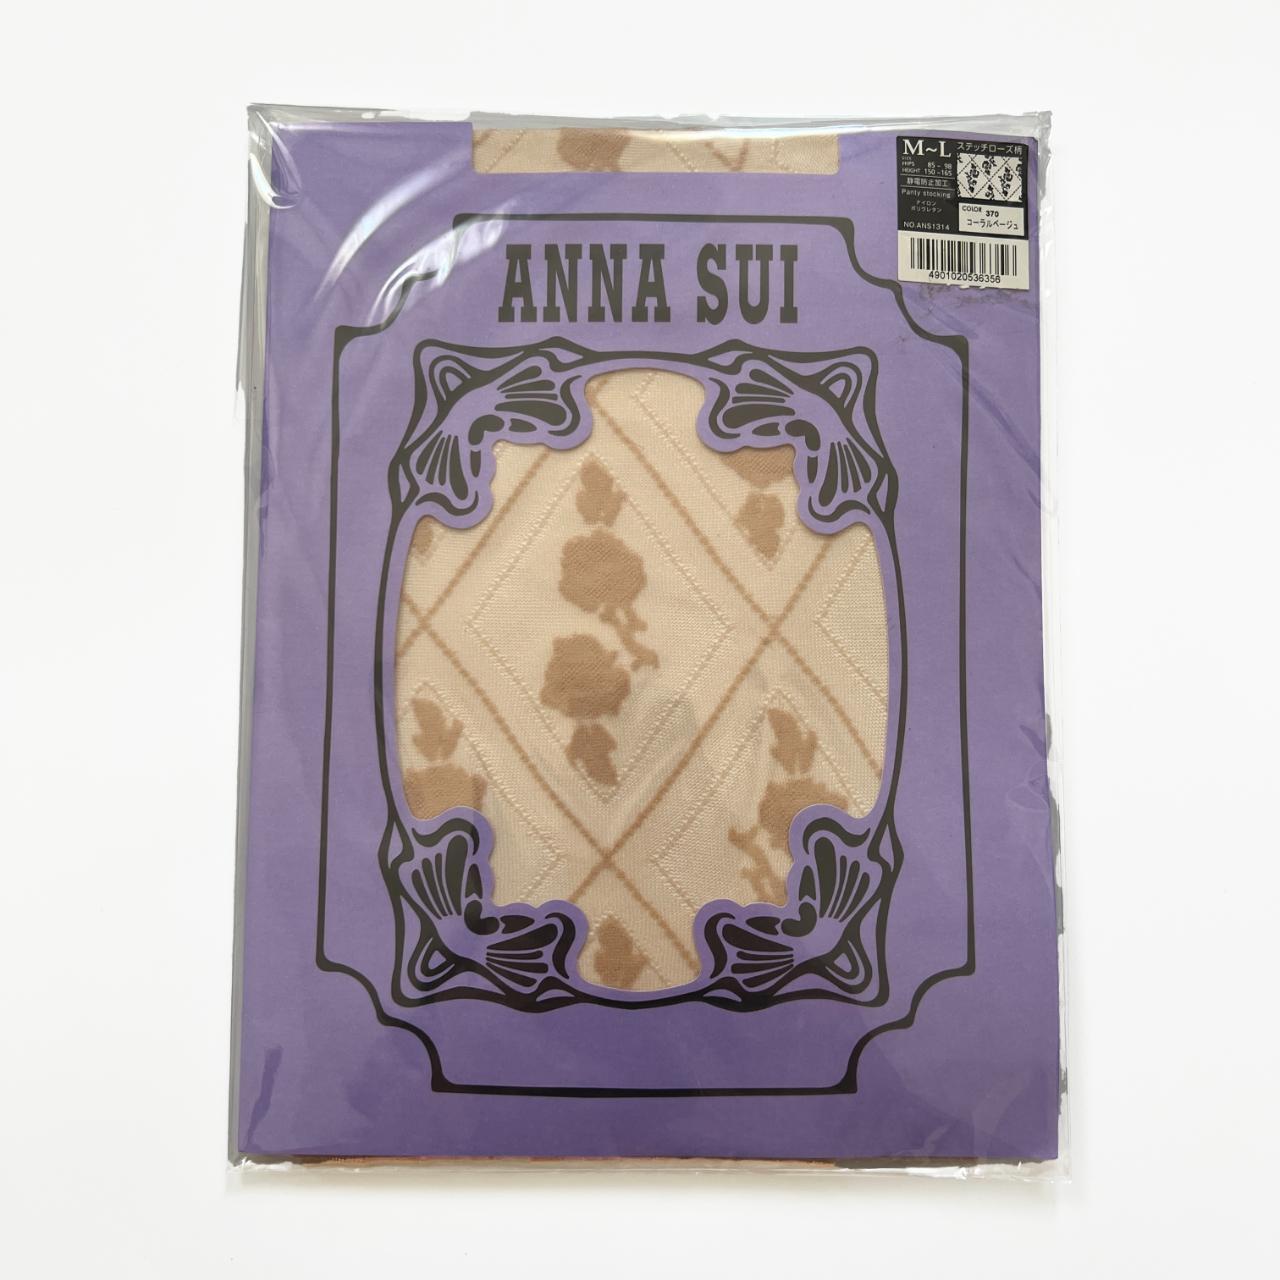 Anna Sui Women's Cream and Tan Hosiery-tights